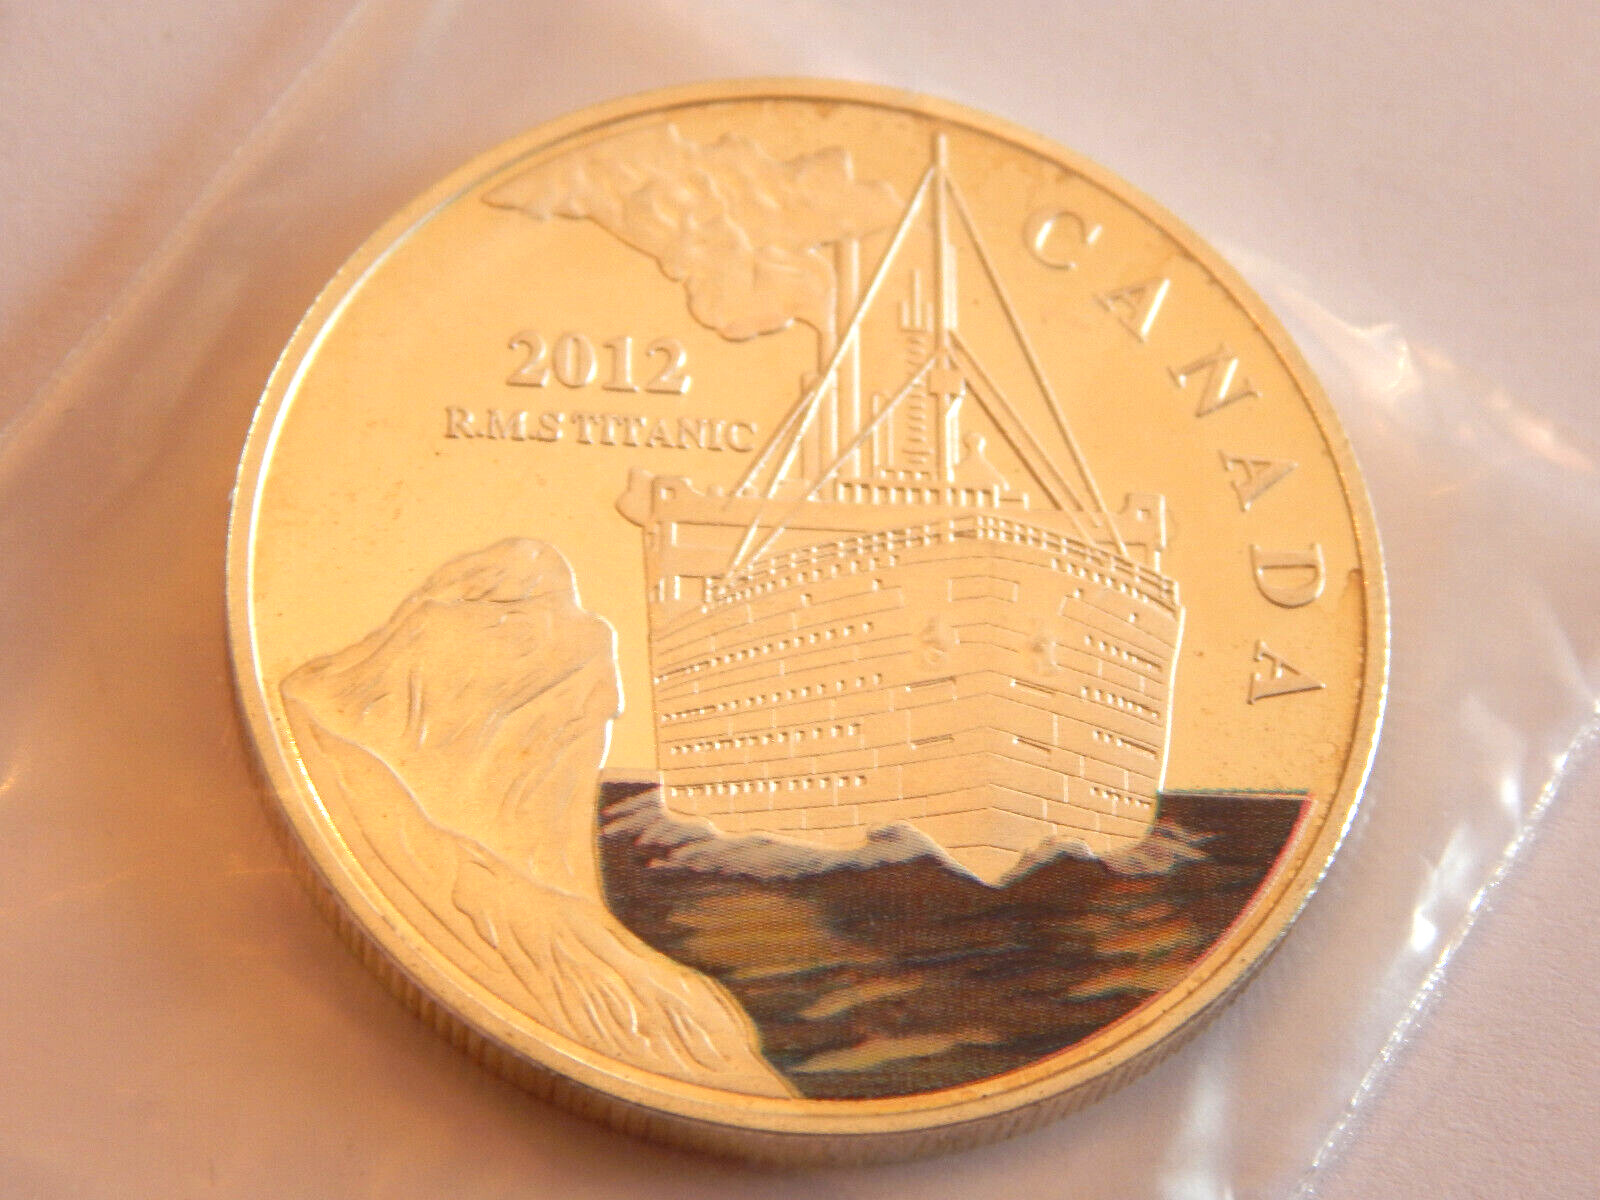 1912 - 2012 Titanic Anniversary Queen Elizabeth II Silver Plate Canada CoinCoin 